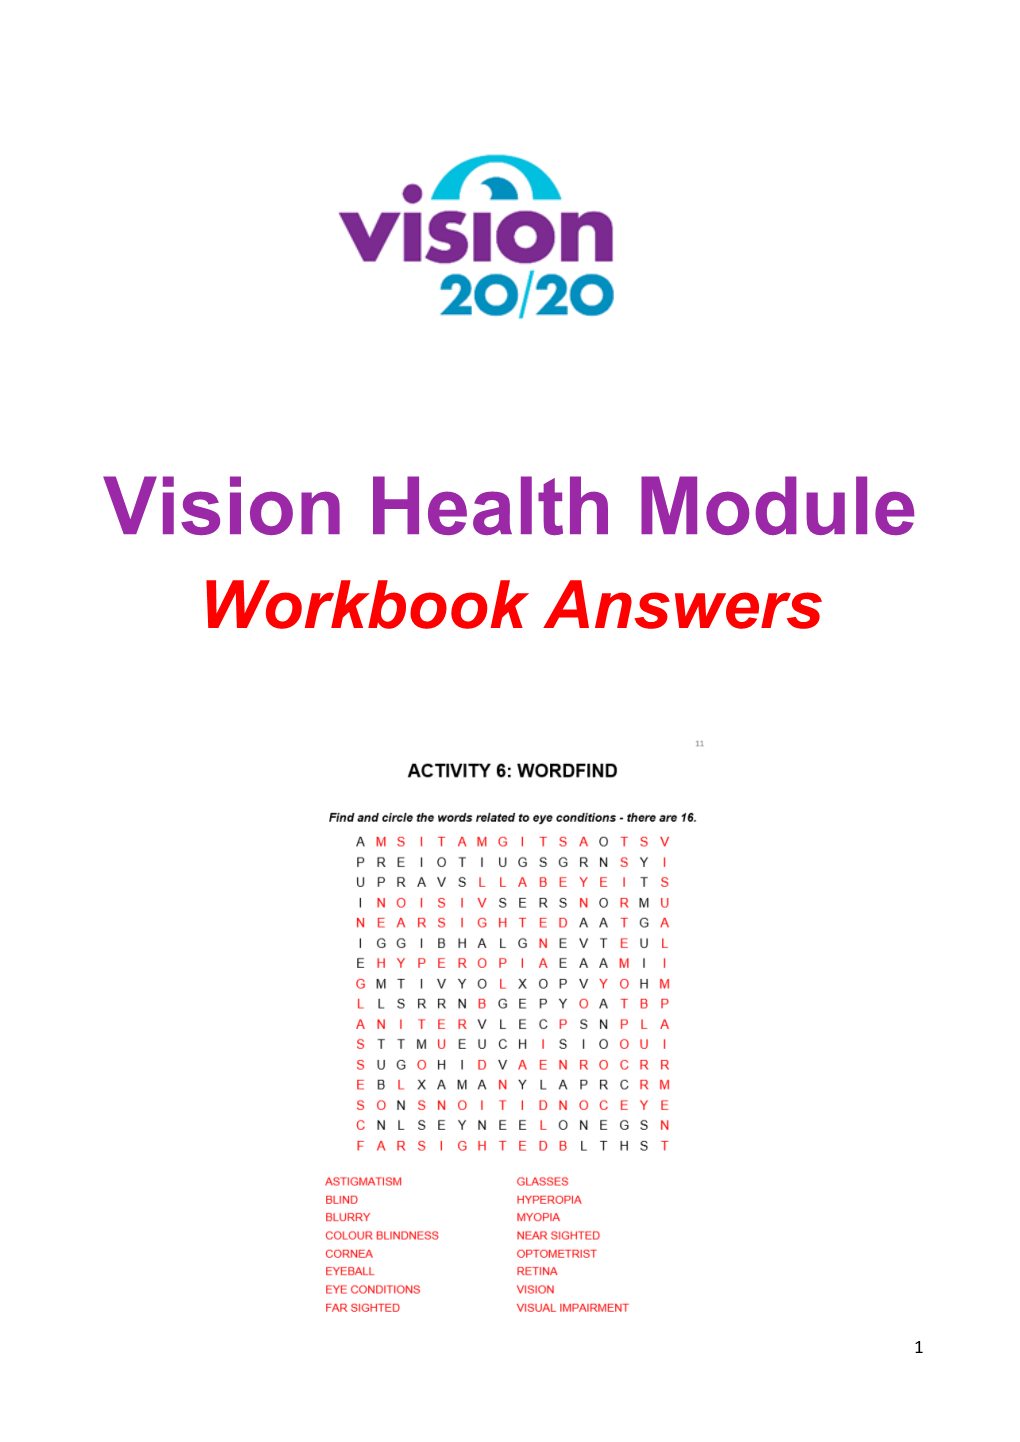 Vision Health Module Workbook Answers